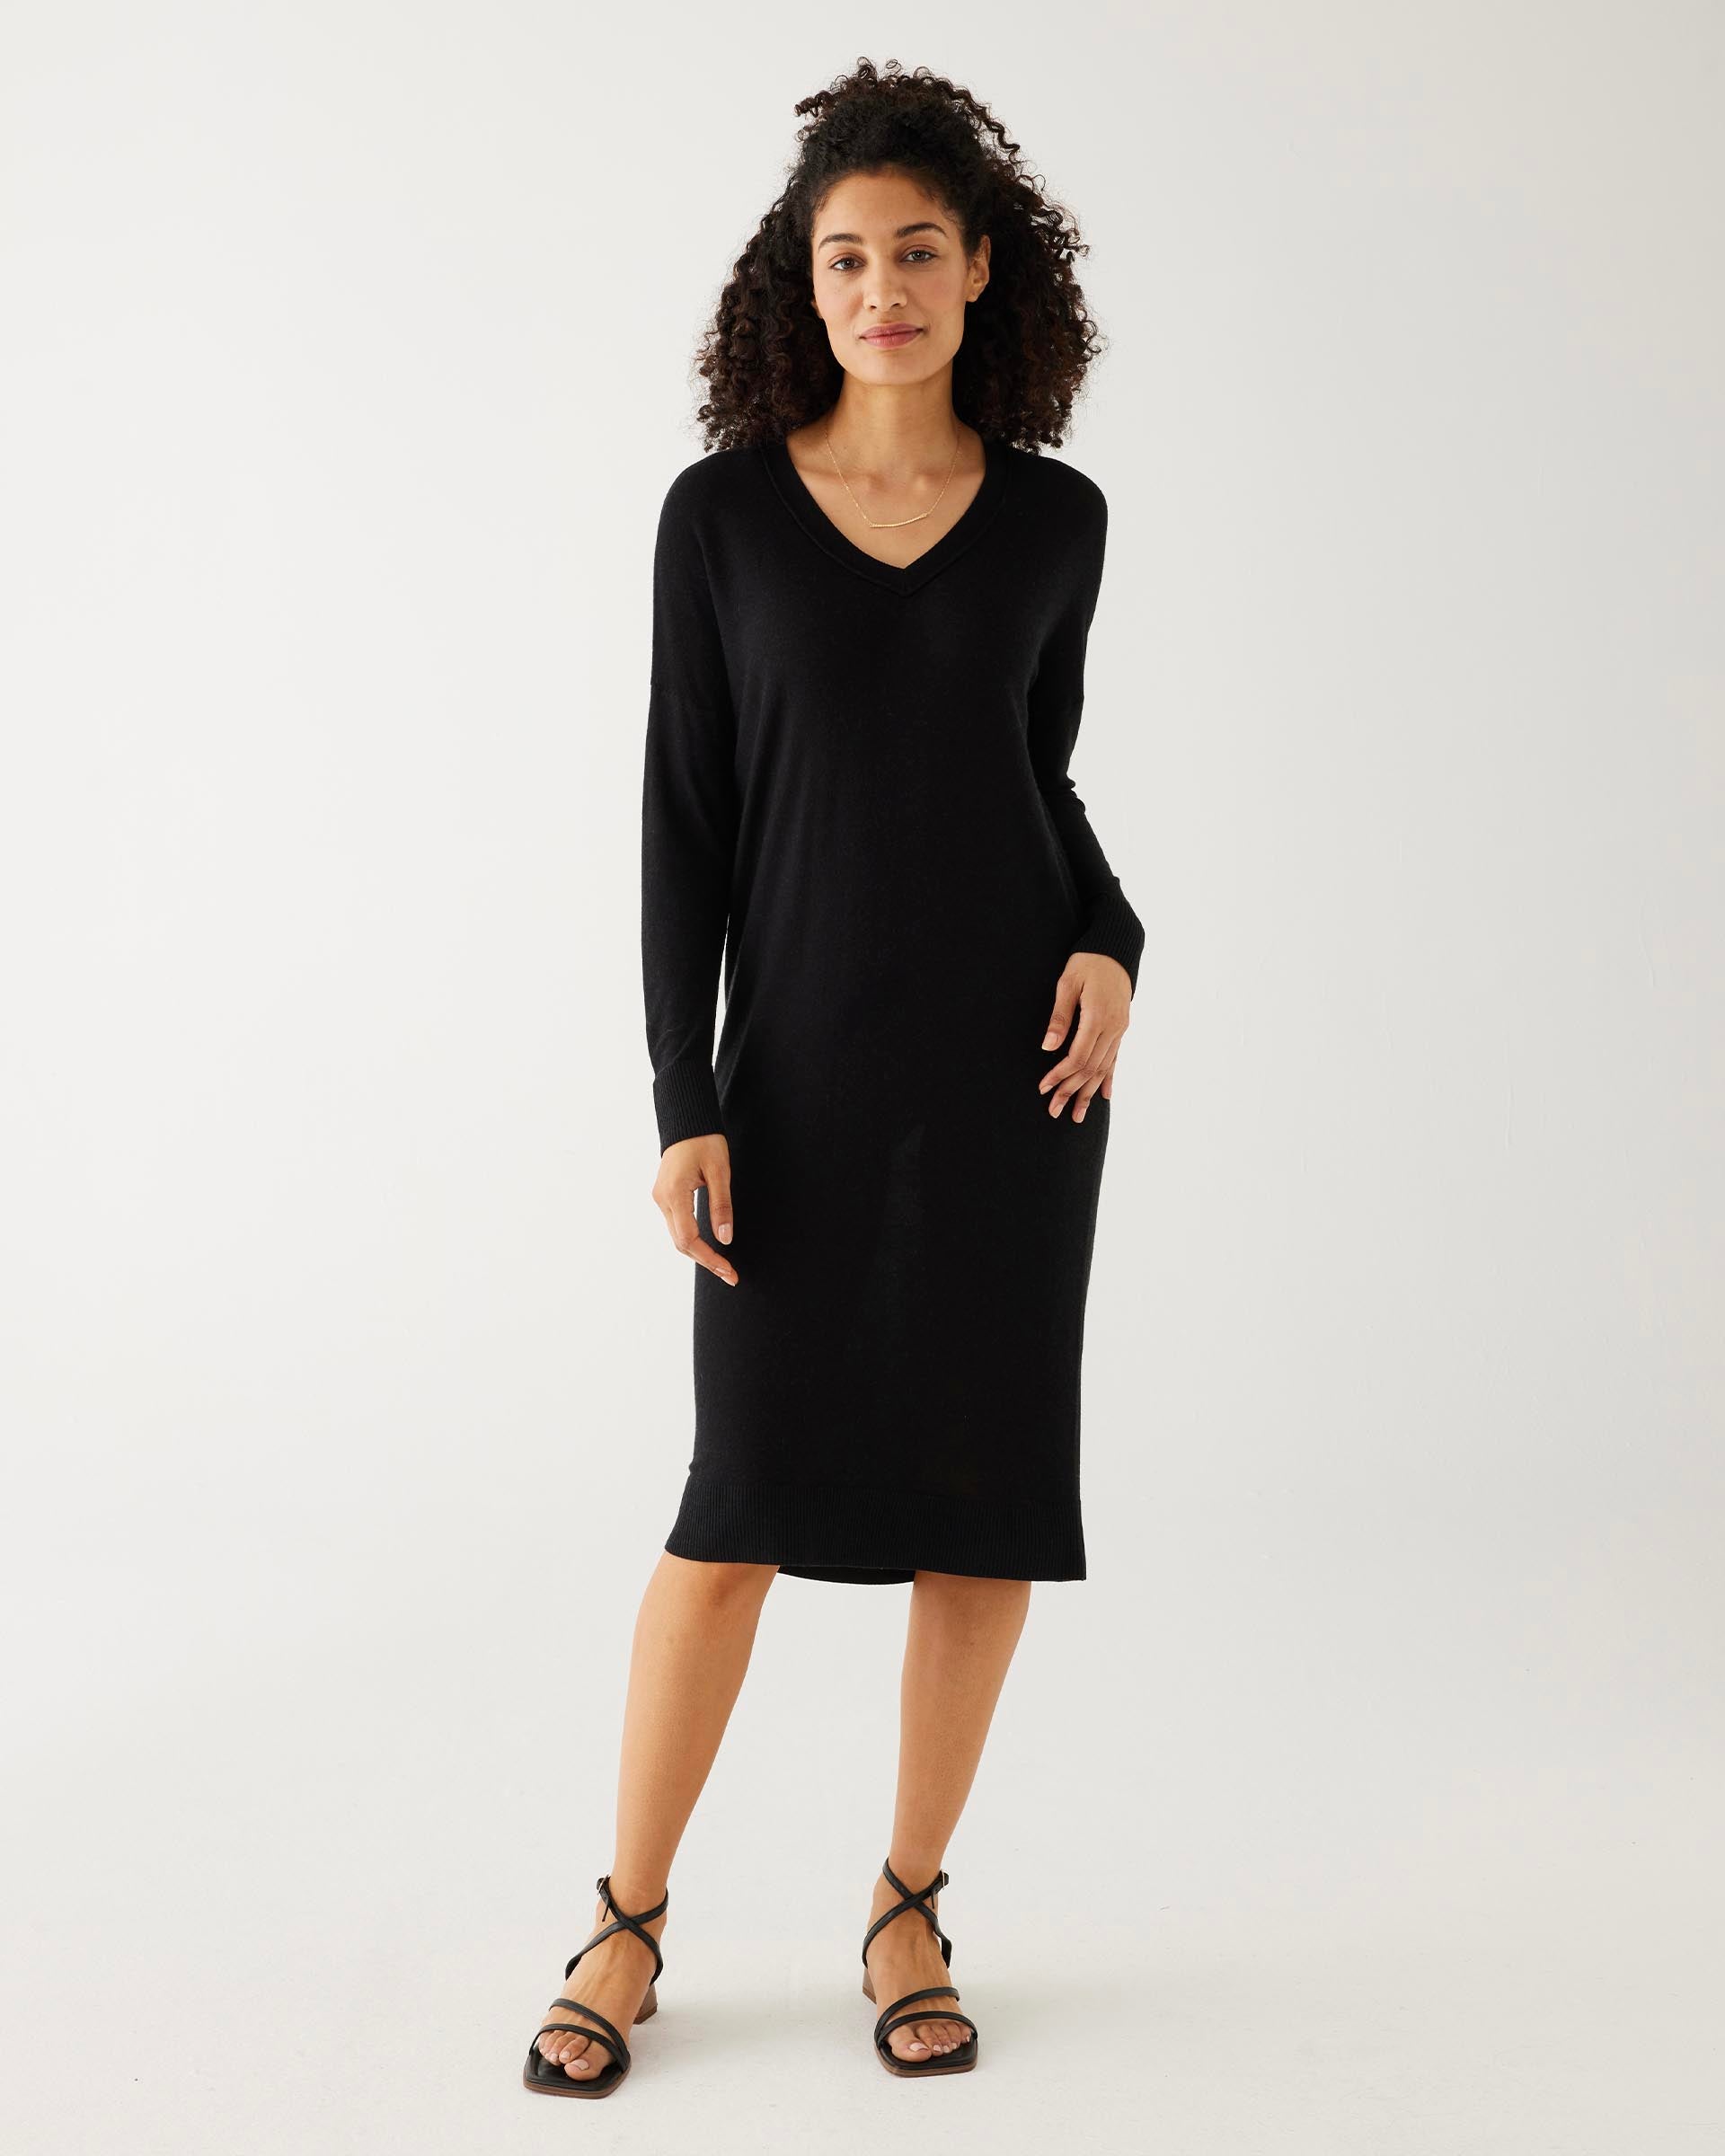 woman showcasing mersea black long sleeve v neck saltwash sweater dress with black sandals